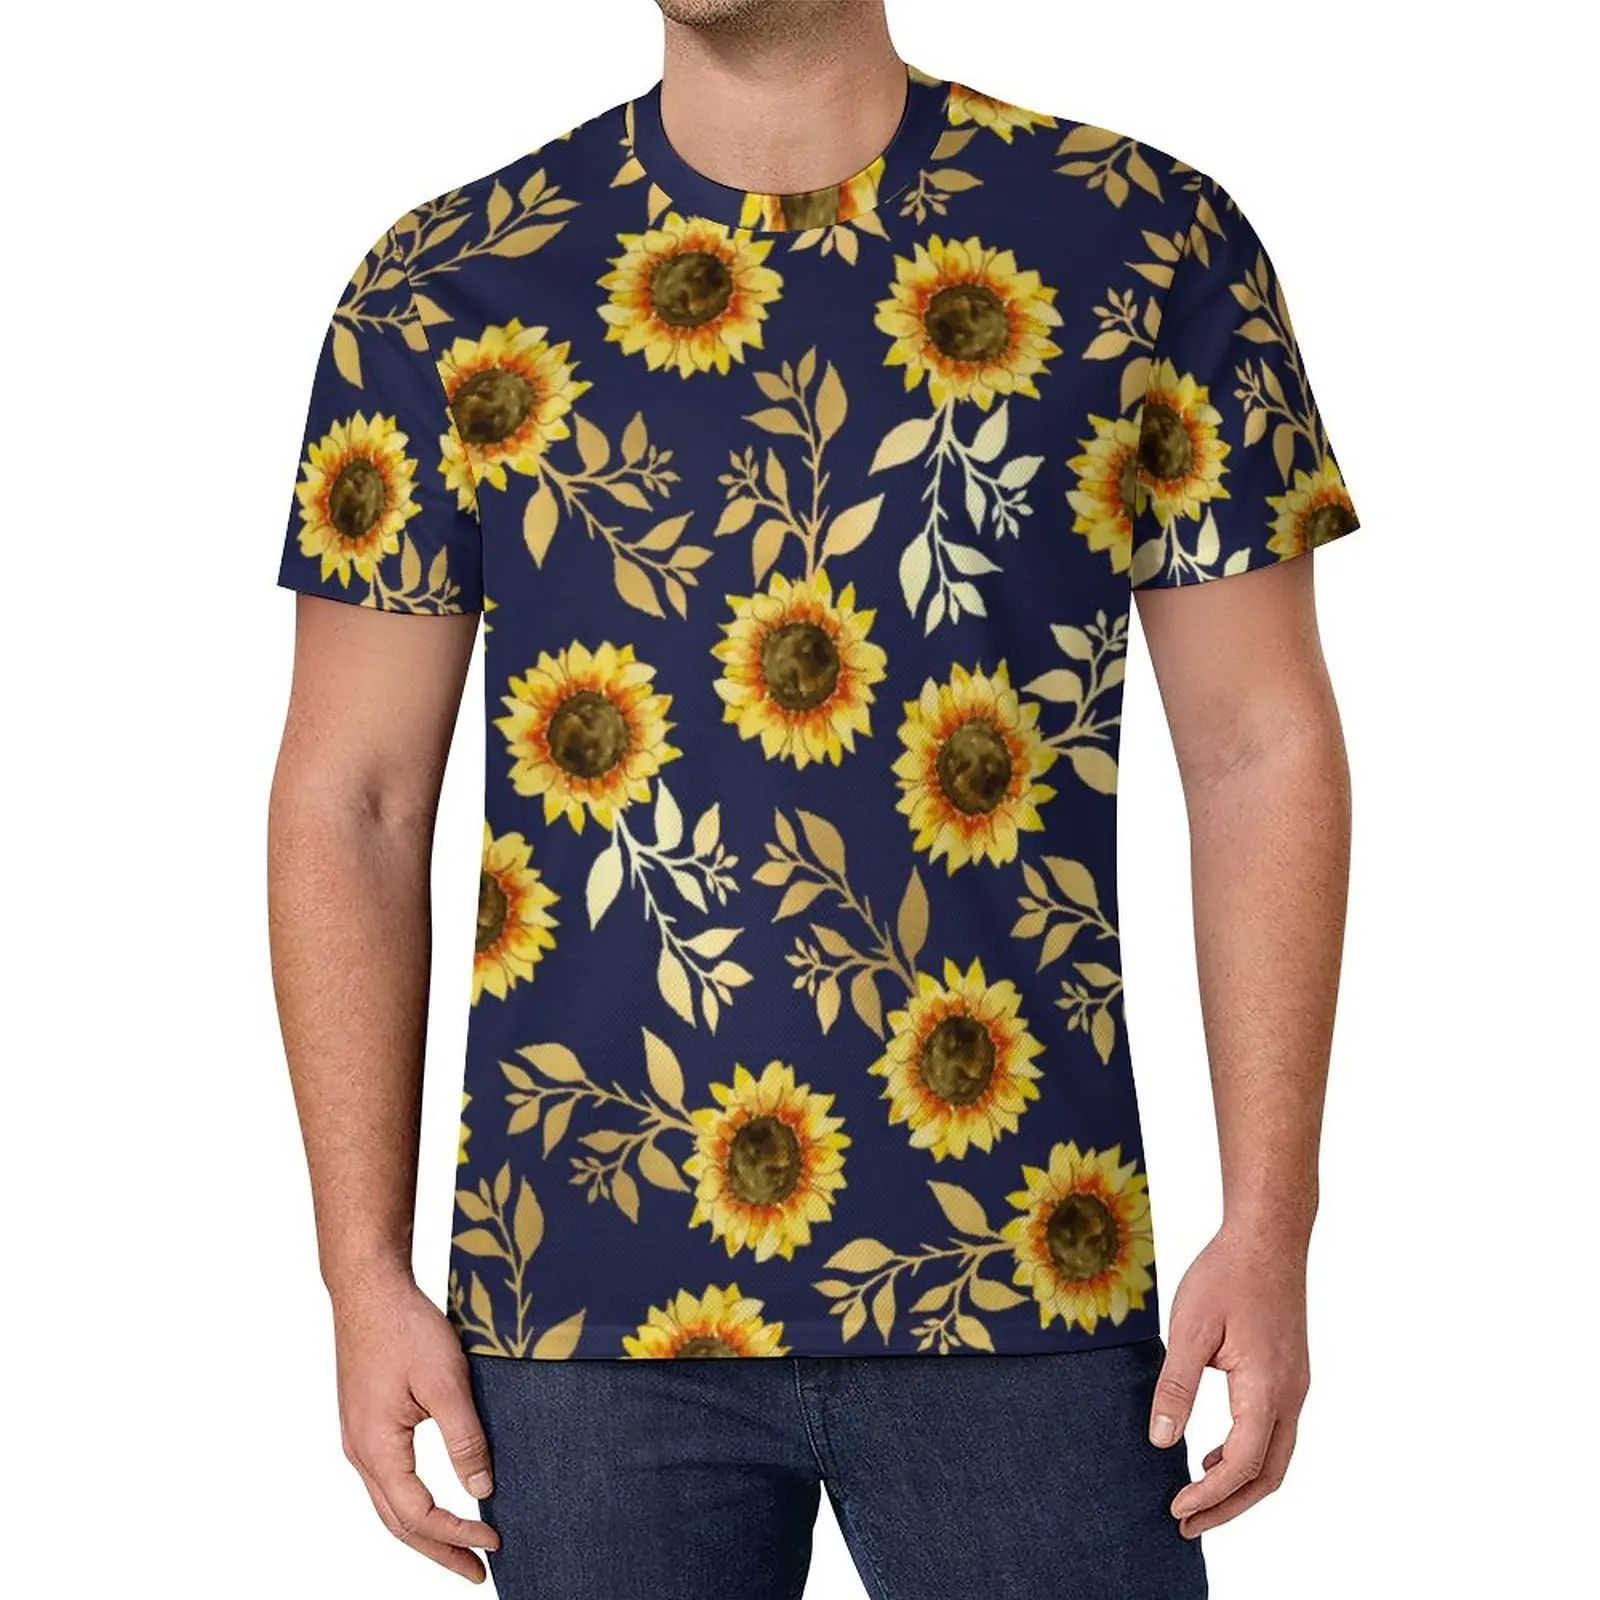 

Gold Navy Sunflower T Shirt Leaves Print Basic T-Shirts Fashion Tee Shirt Man Design Tops Plus Size 5XL 6XL